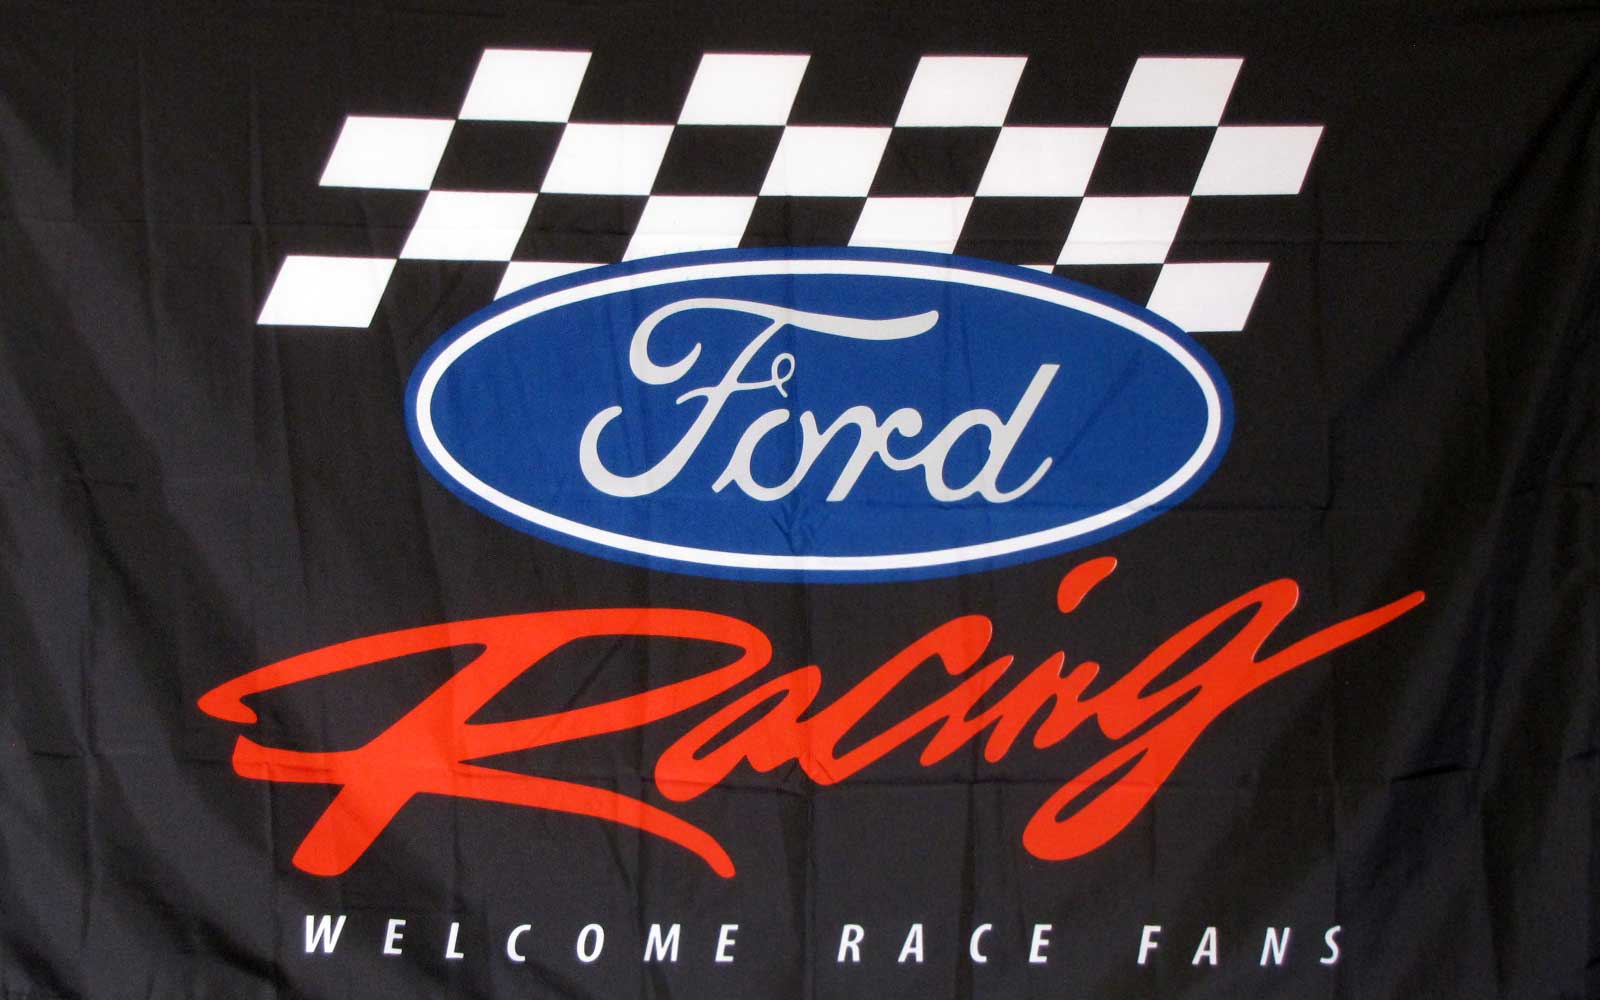 Ford Racing Logo - Ford racing Logos